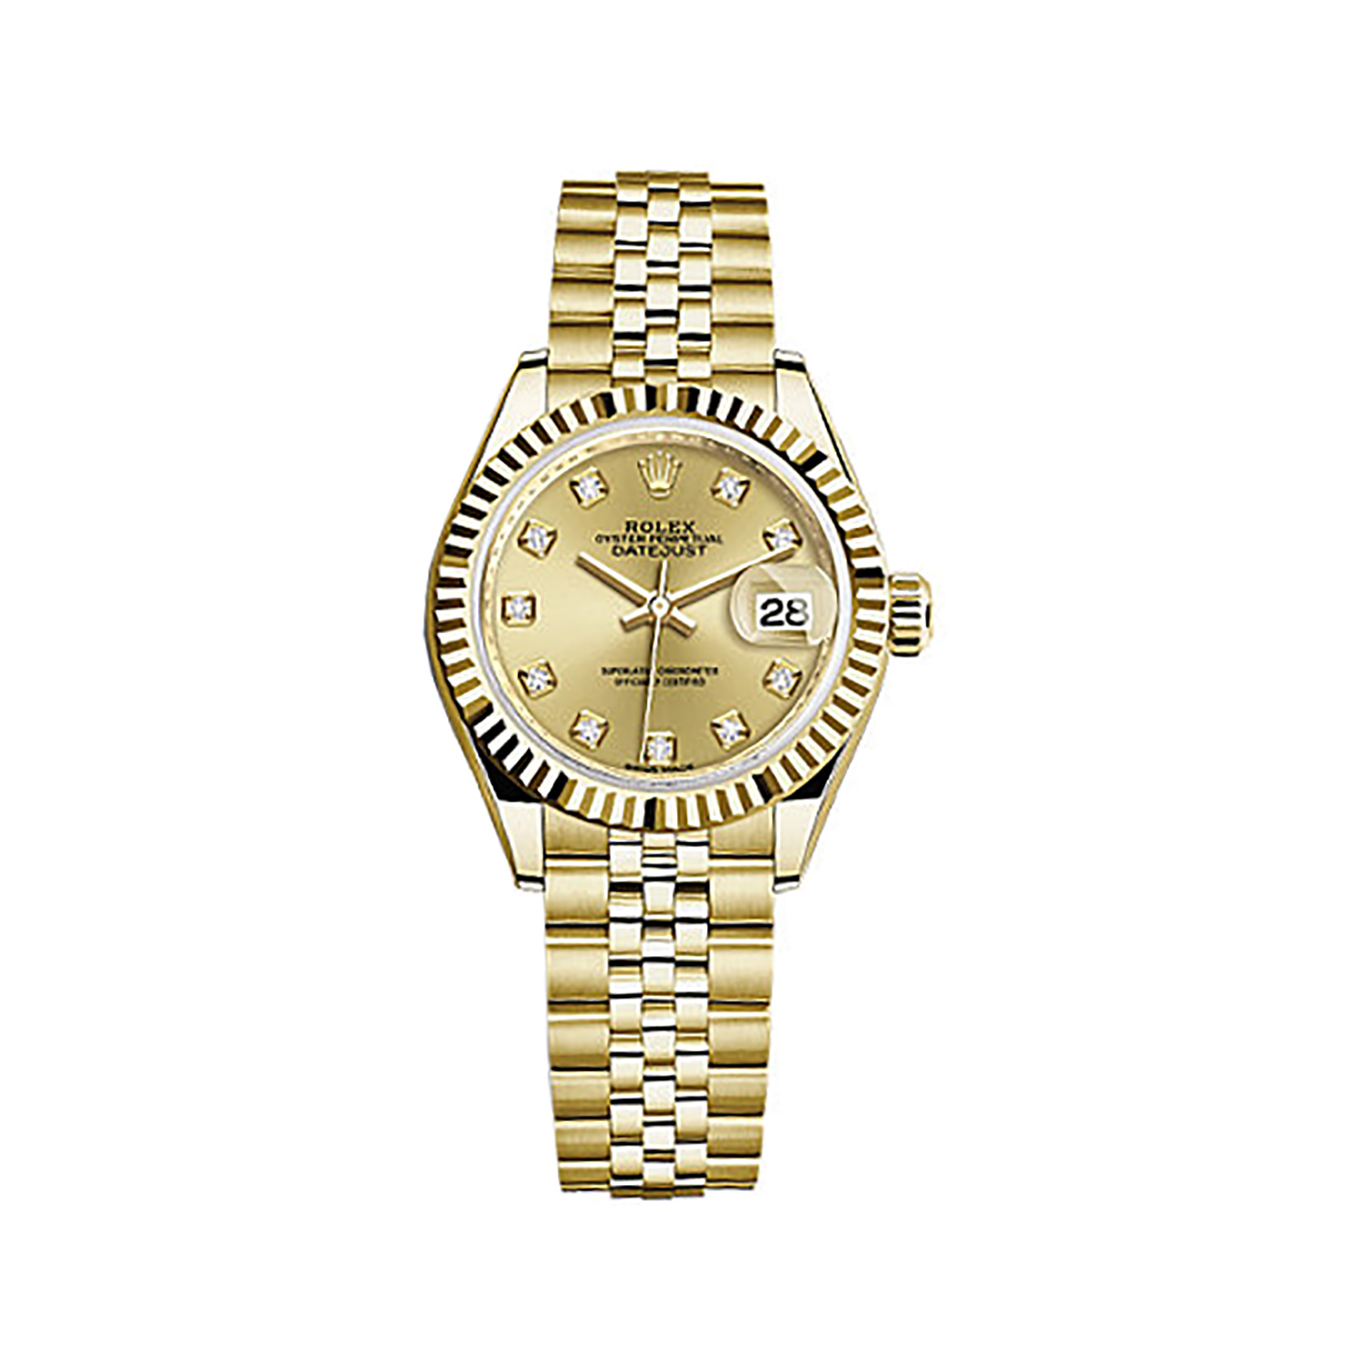 Lady-Datejust 28 279178 Gold Watch (Champagne Set with Diamonds)